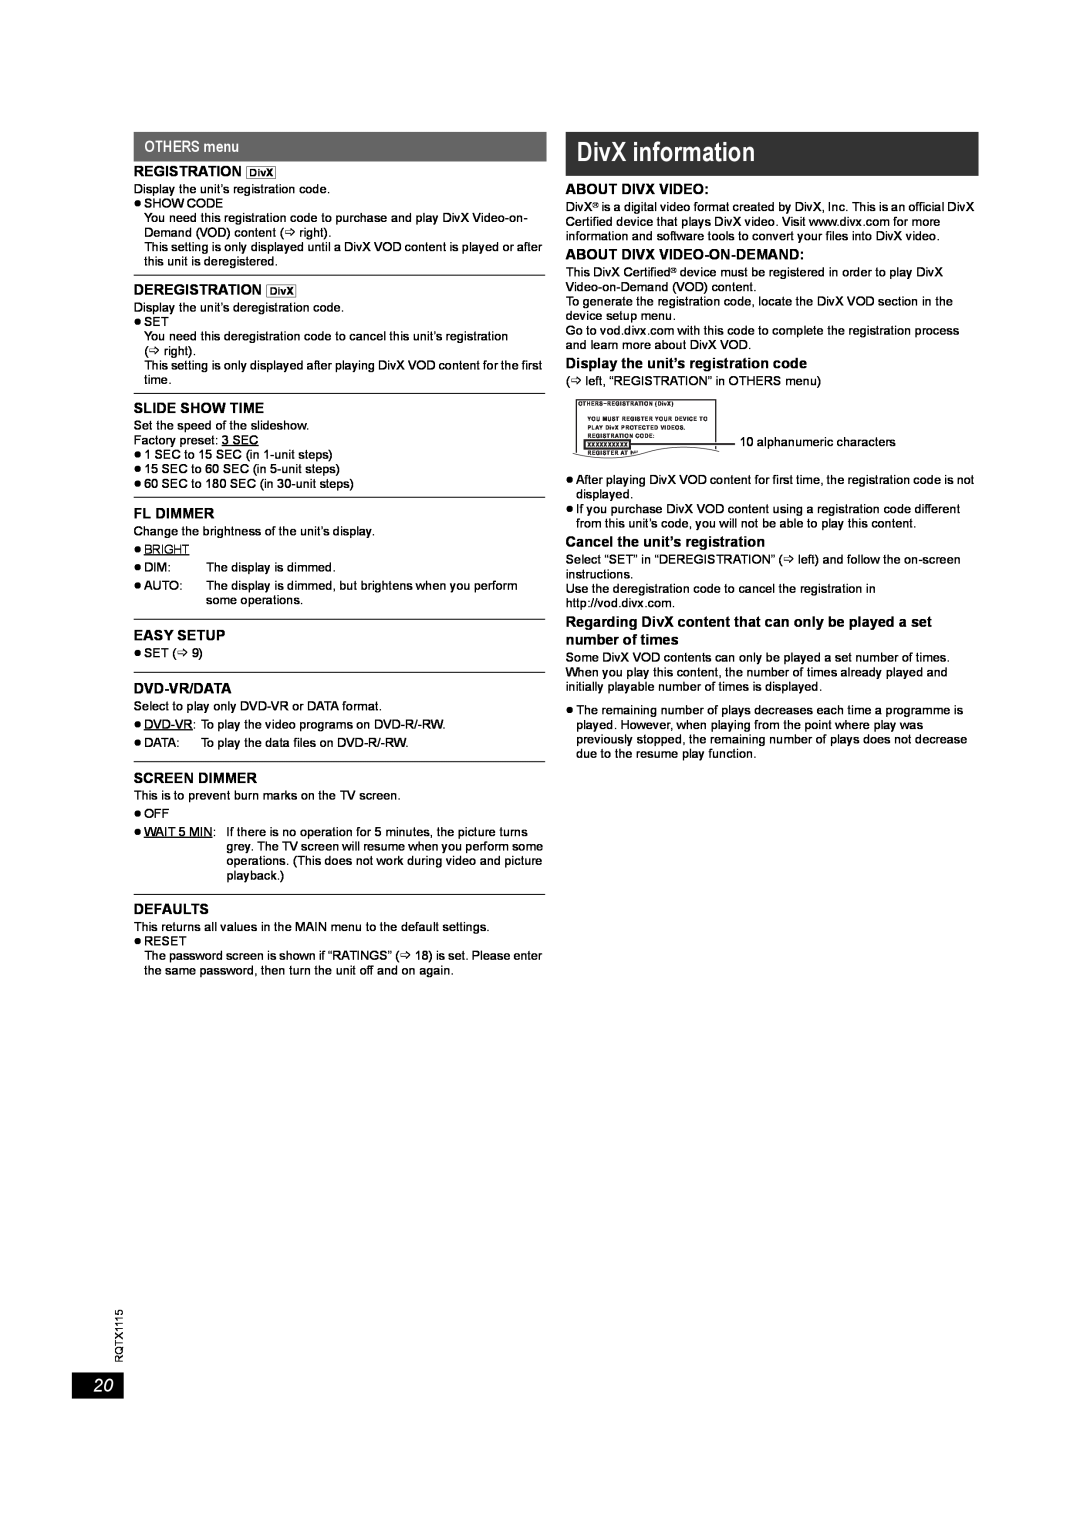 Panasonic SC-PT580, SC-PT980 manual DivX information, OTHERS menu 